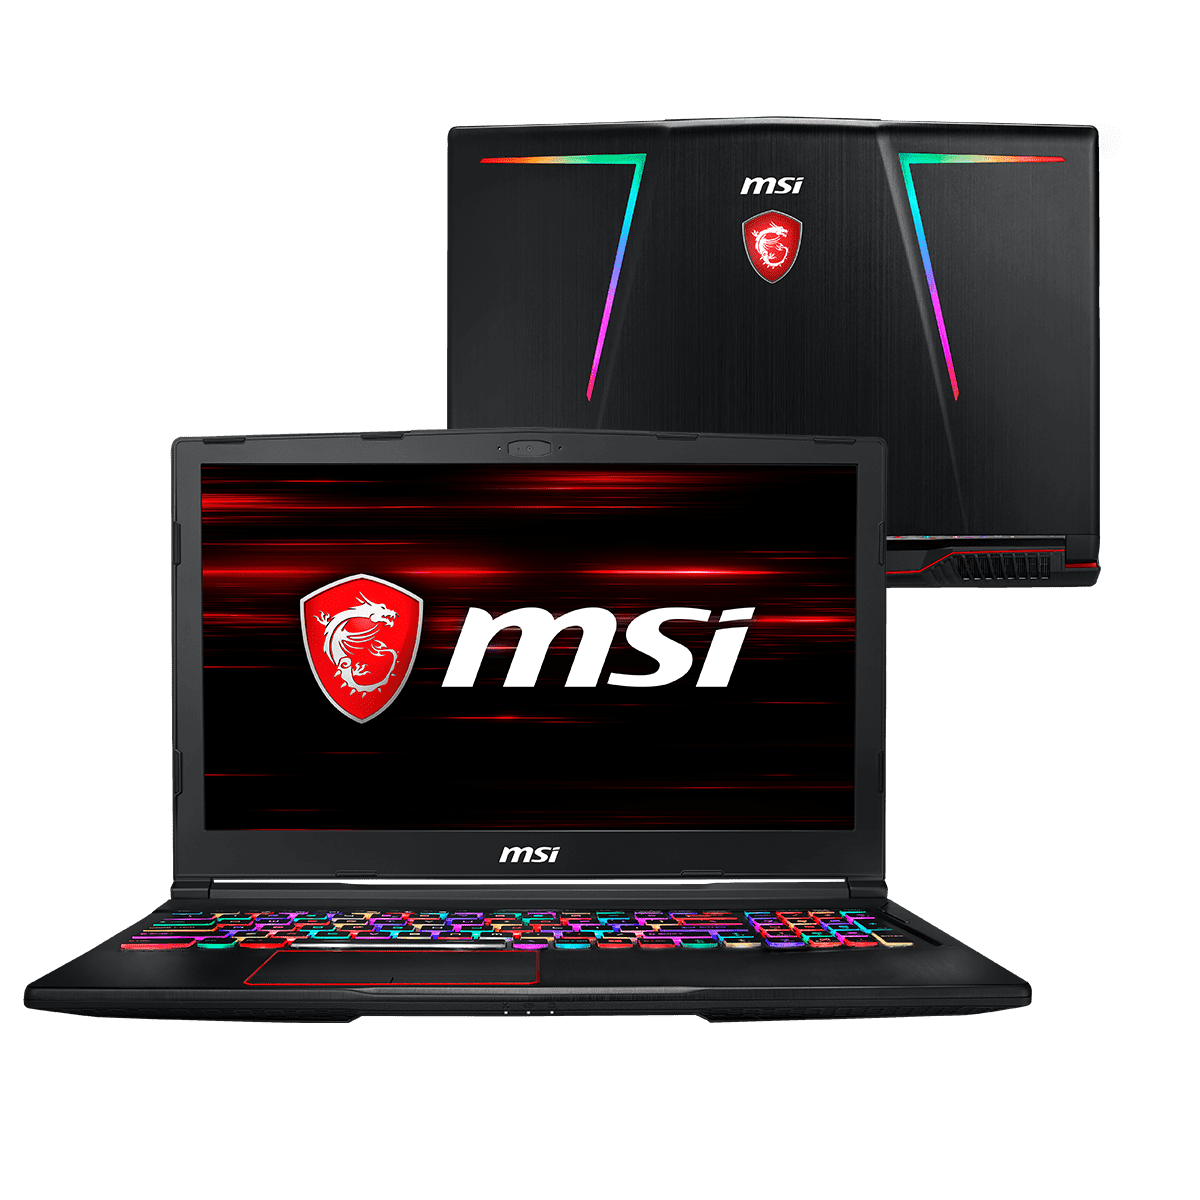 M xi. Игровой ноут MSI белы1. MSI RGB ноутбук. MSI ноутбук MSI. MSI g63 8rc.